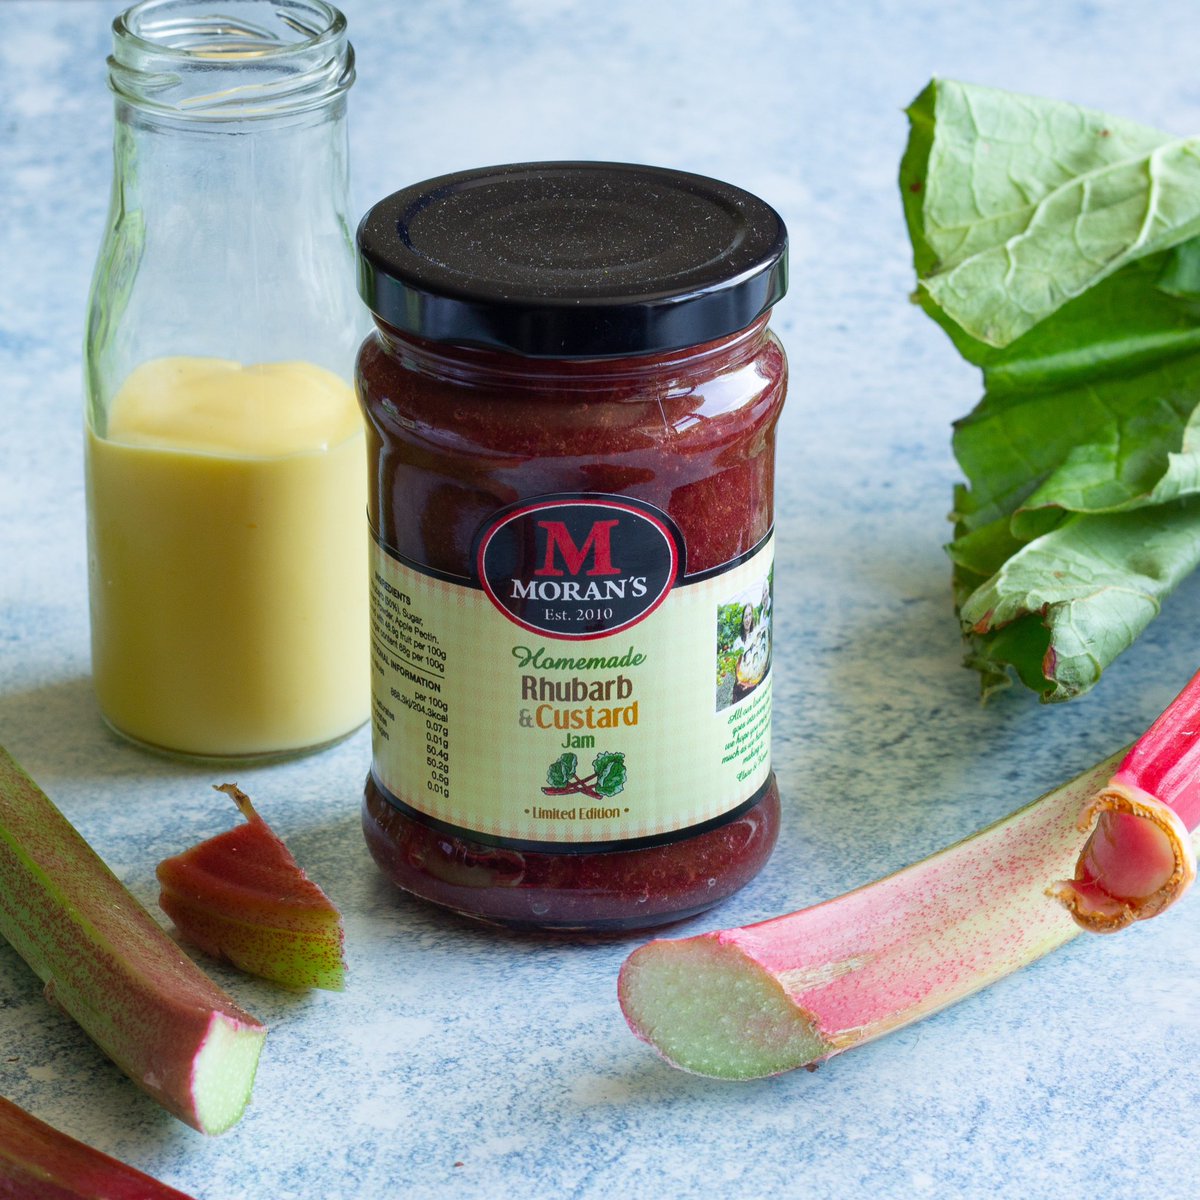 With Rhubarb at its best right now , why not try something a little different Rhubarb & custard jam is back ! moransmegajam.ie @createdincavan #jam #rhubarb #custard